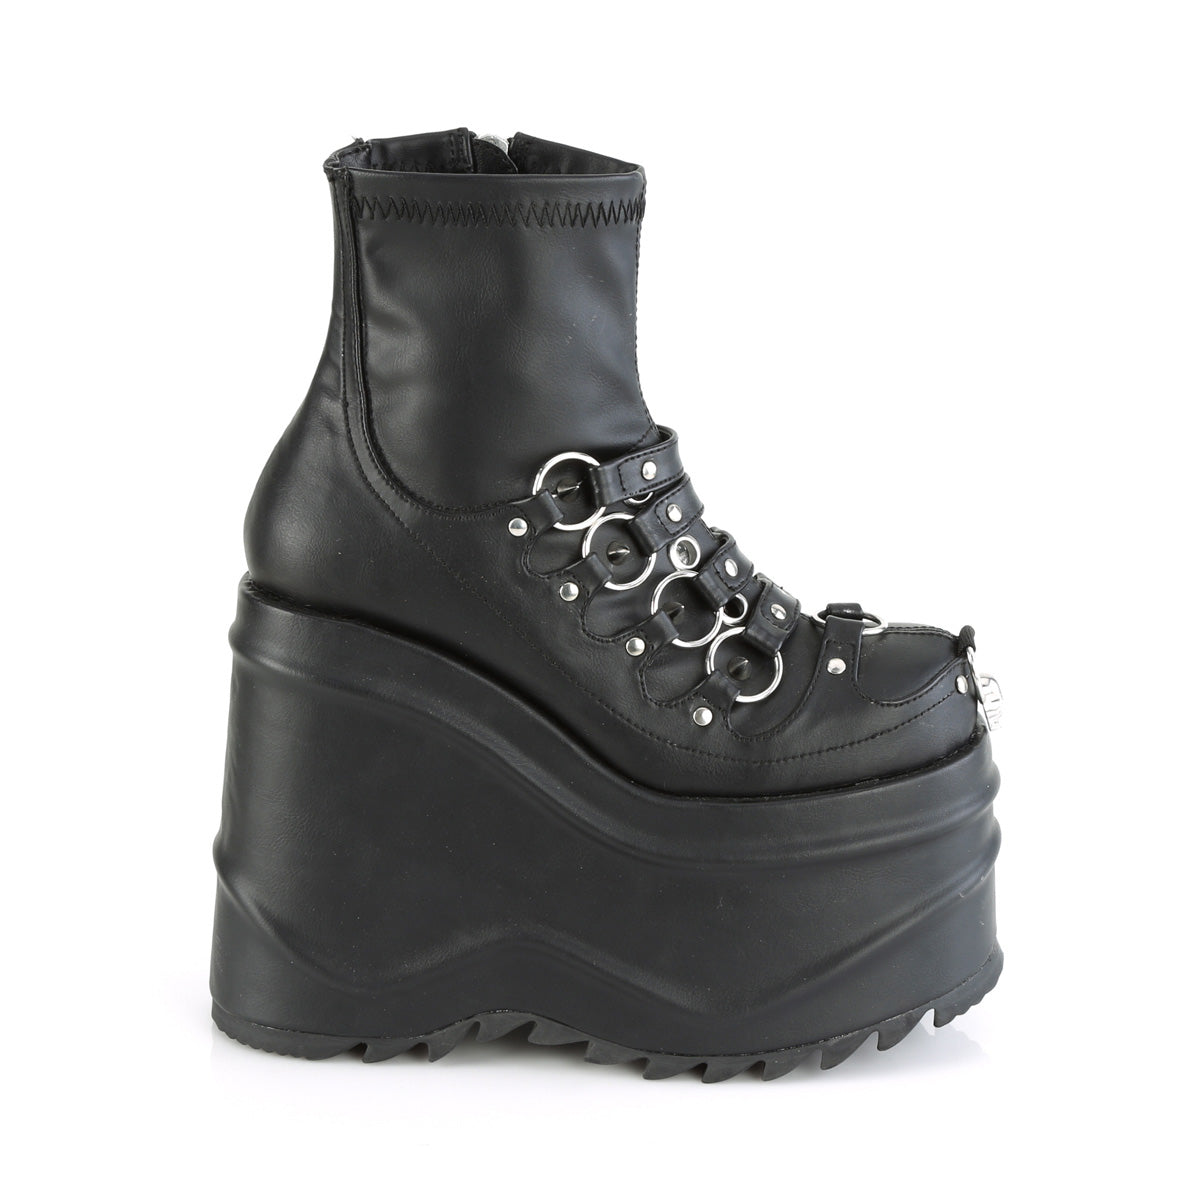 WAVE-110 Black Stretch Vegan Leather Ankle Boot Demonia